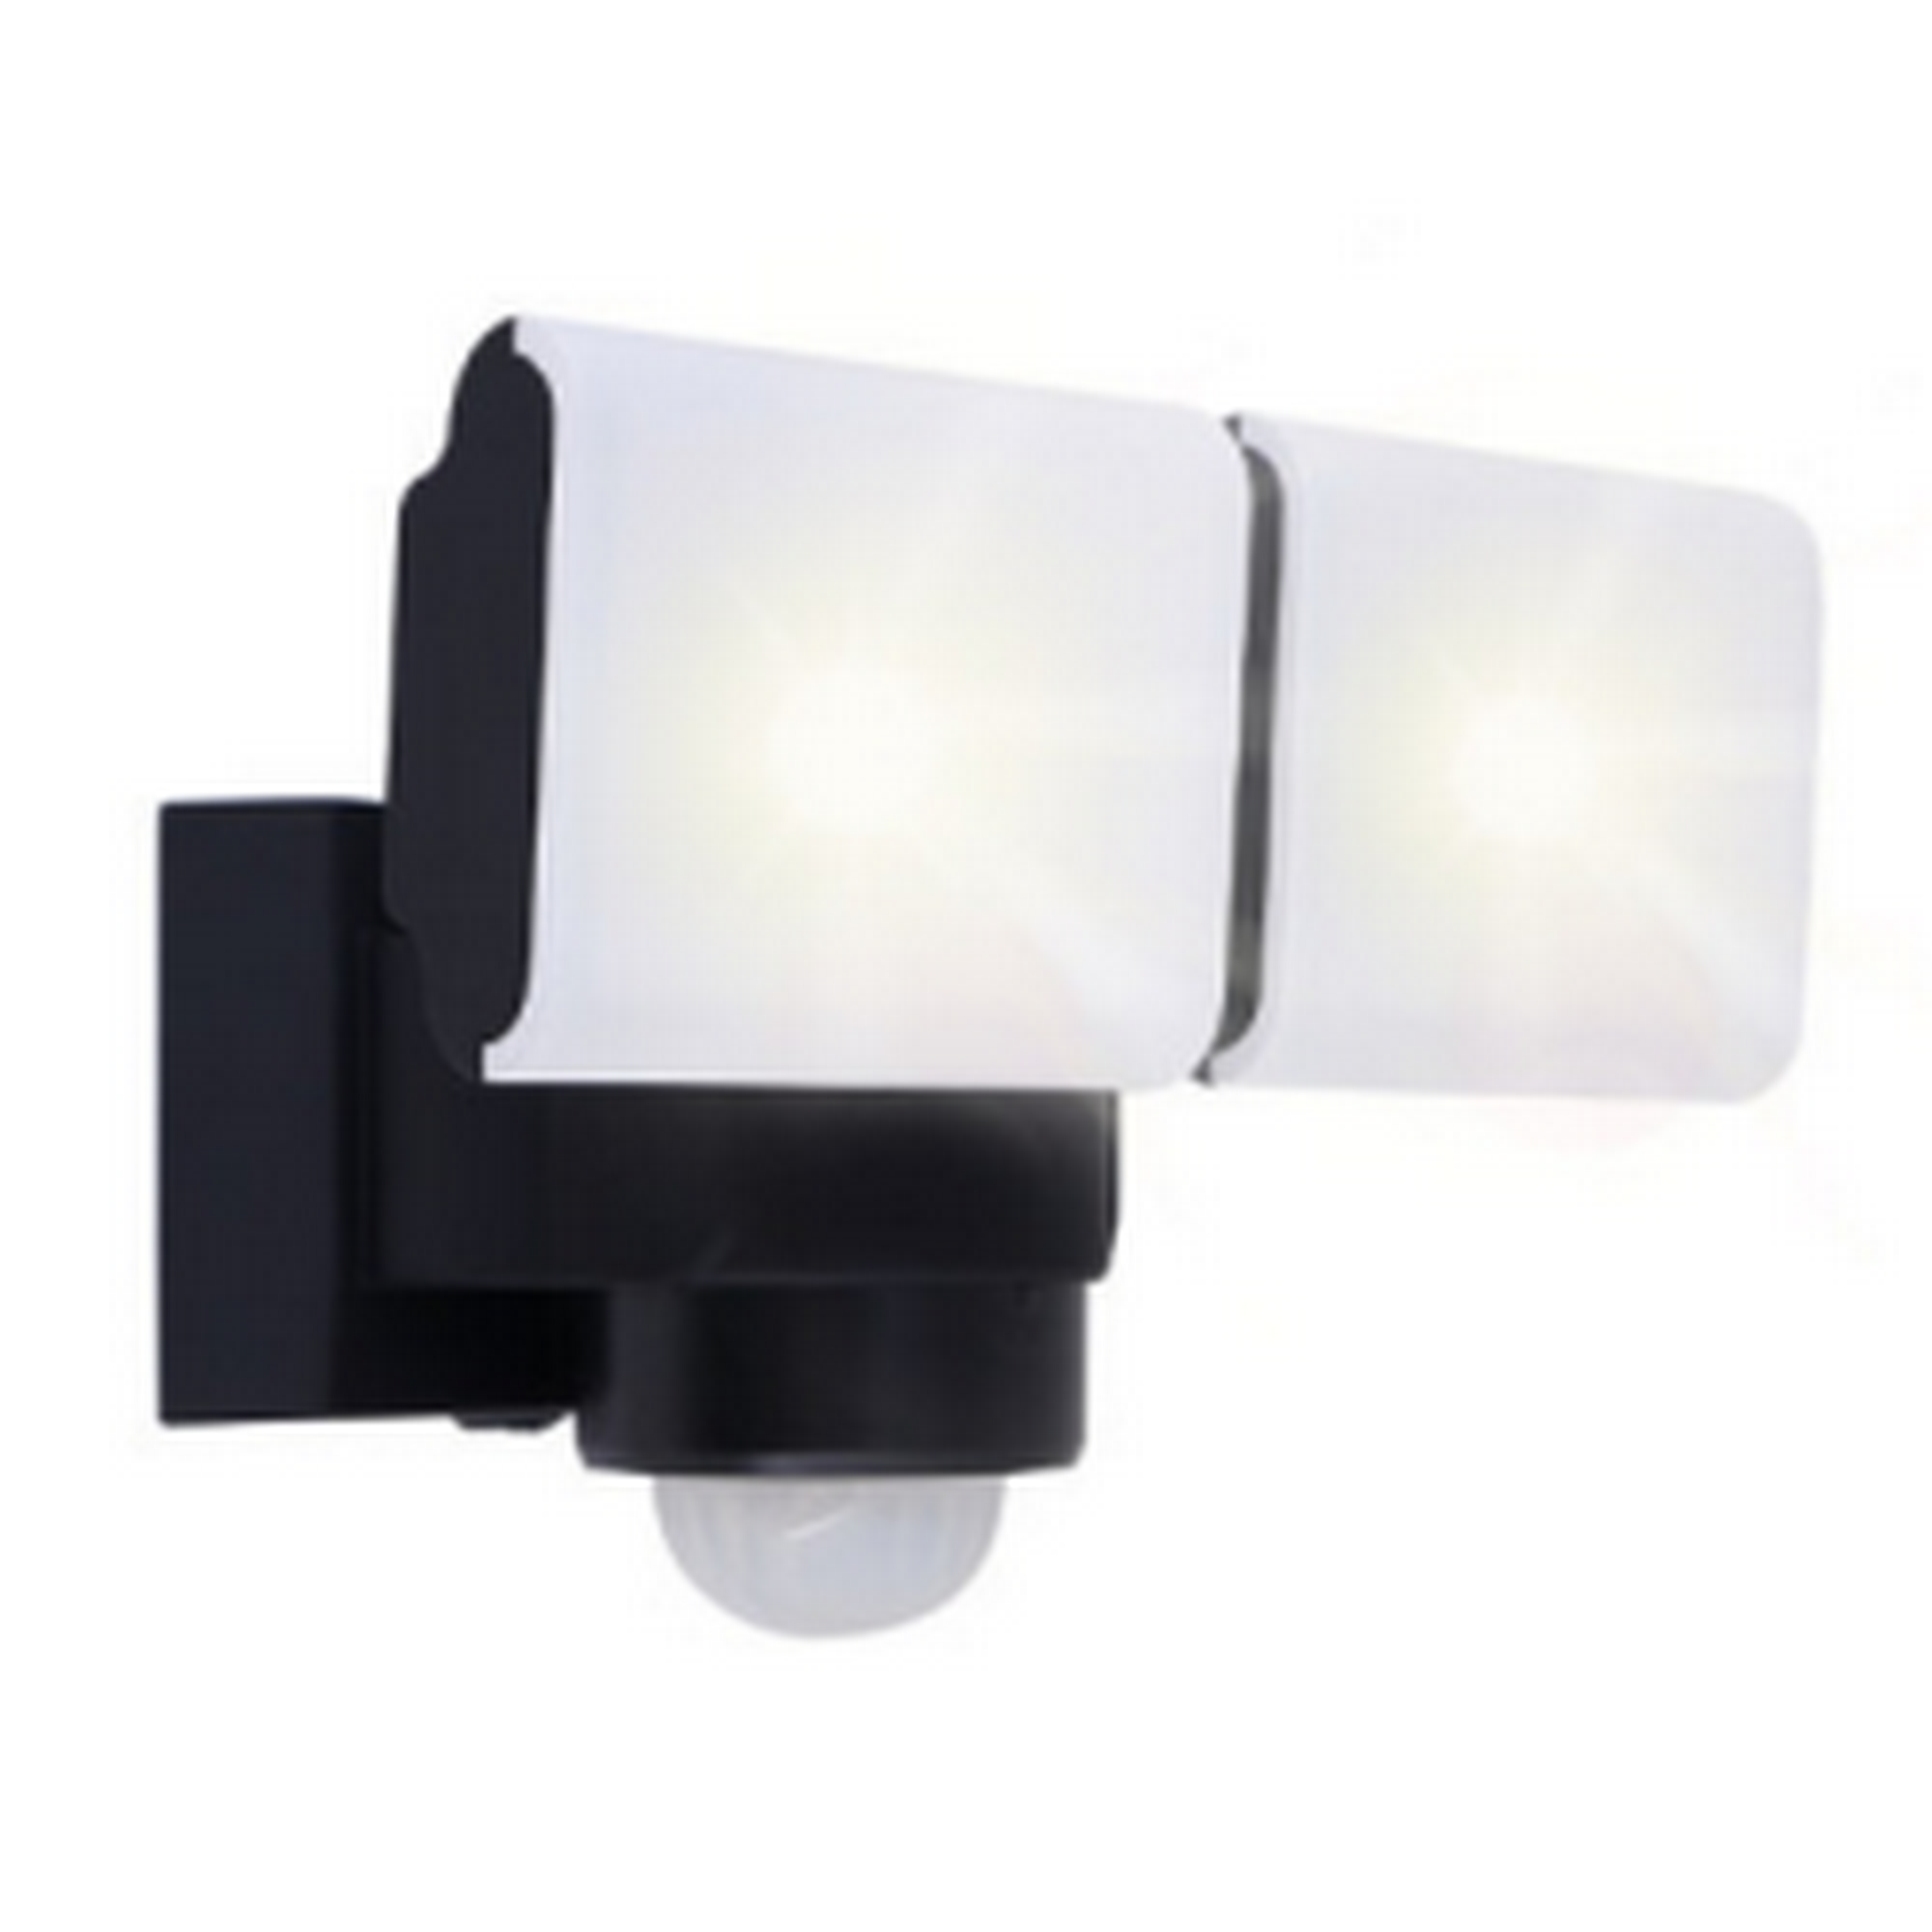 LED-Außenstrahler schwarz/weiß 20 W, 2050 lm 20 x 15 x 15 cm + product picture